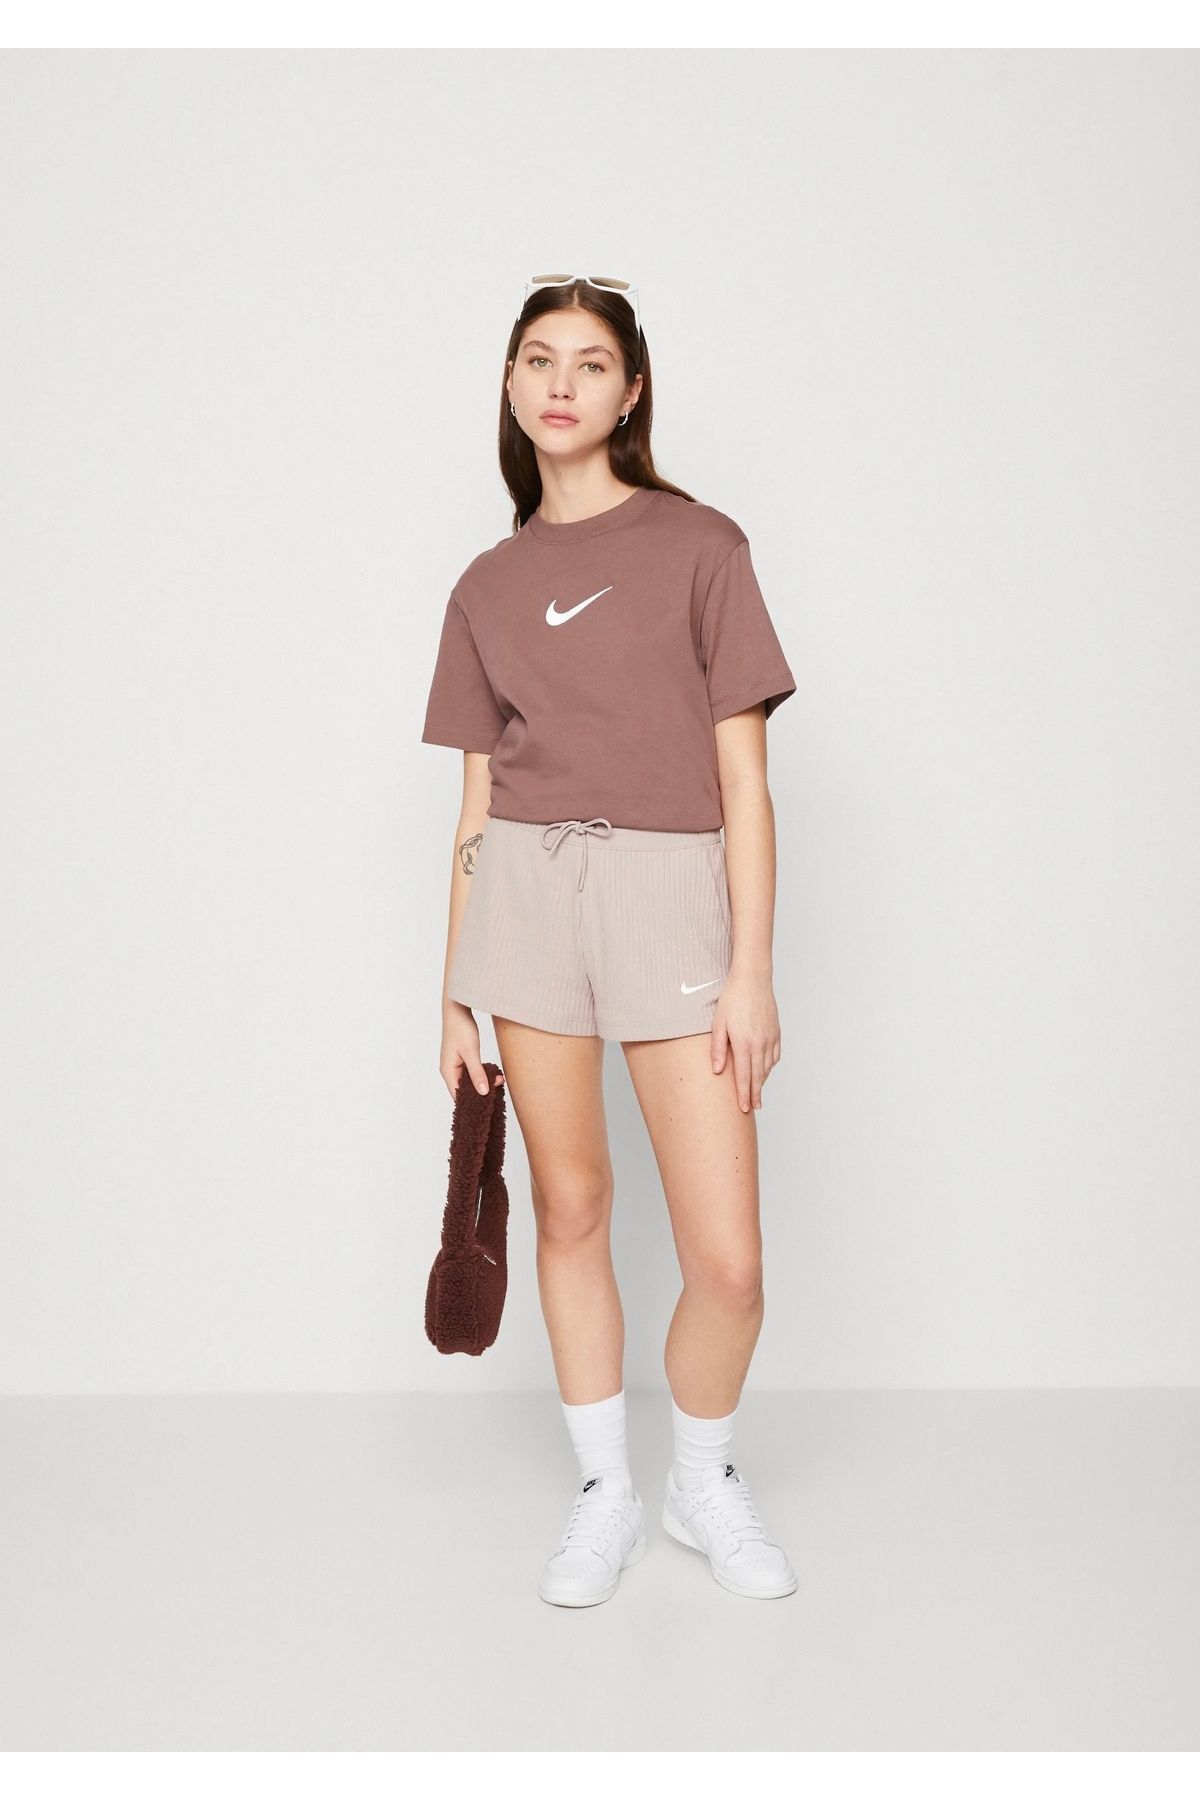 Nike Sportswear Brief Kadın Spor T-Shirt NDD SPORT